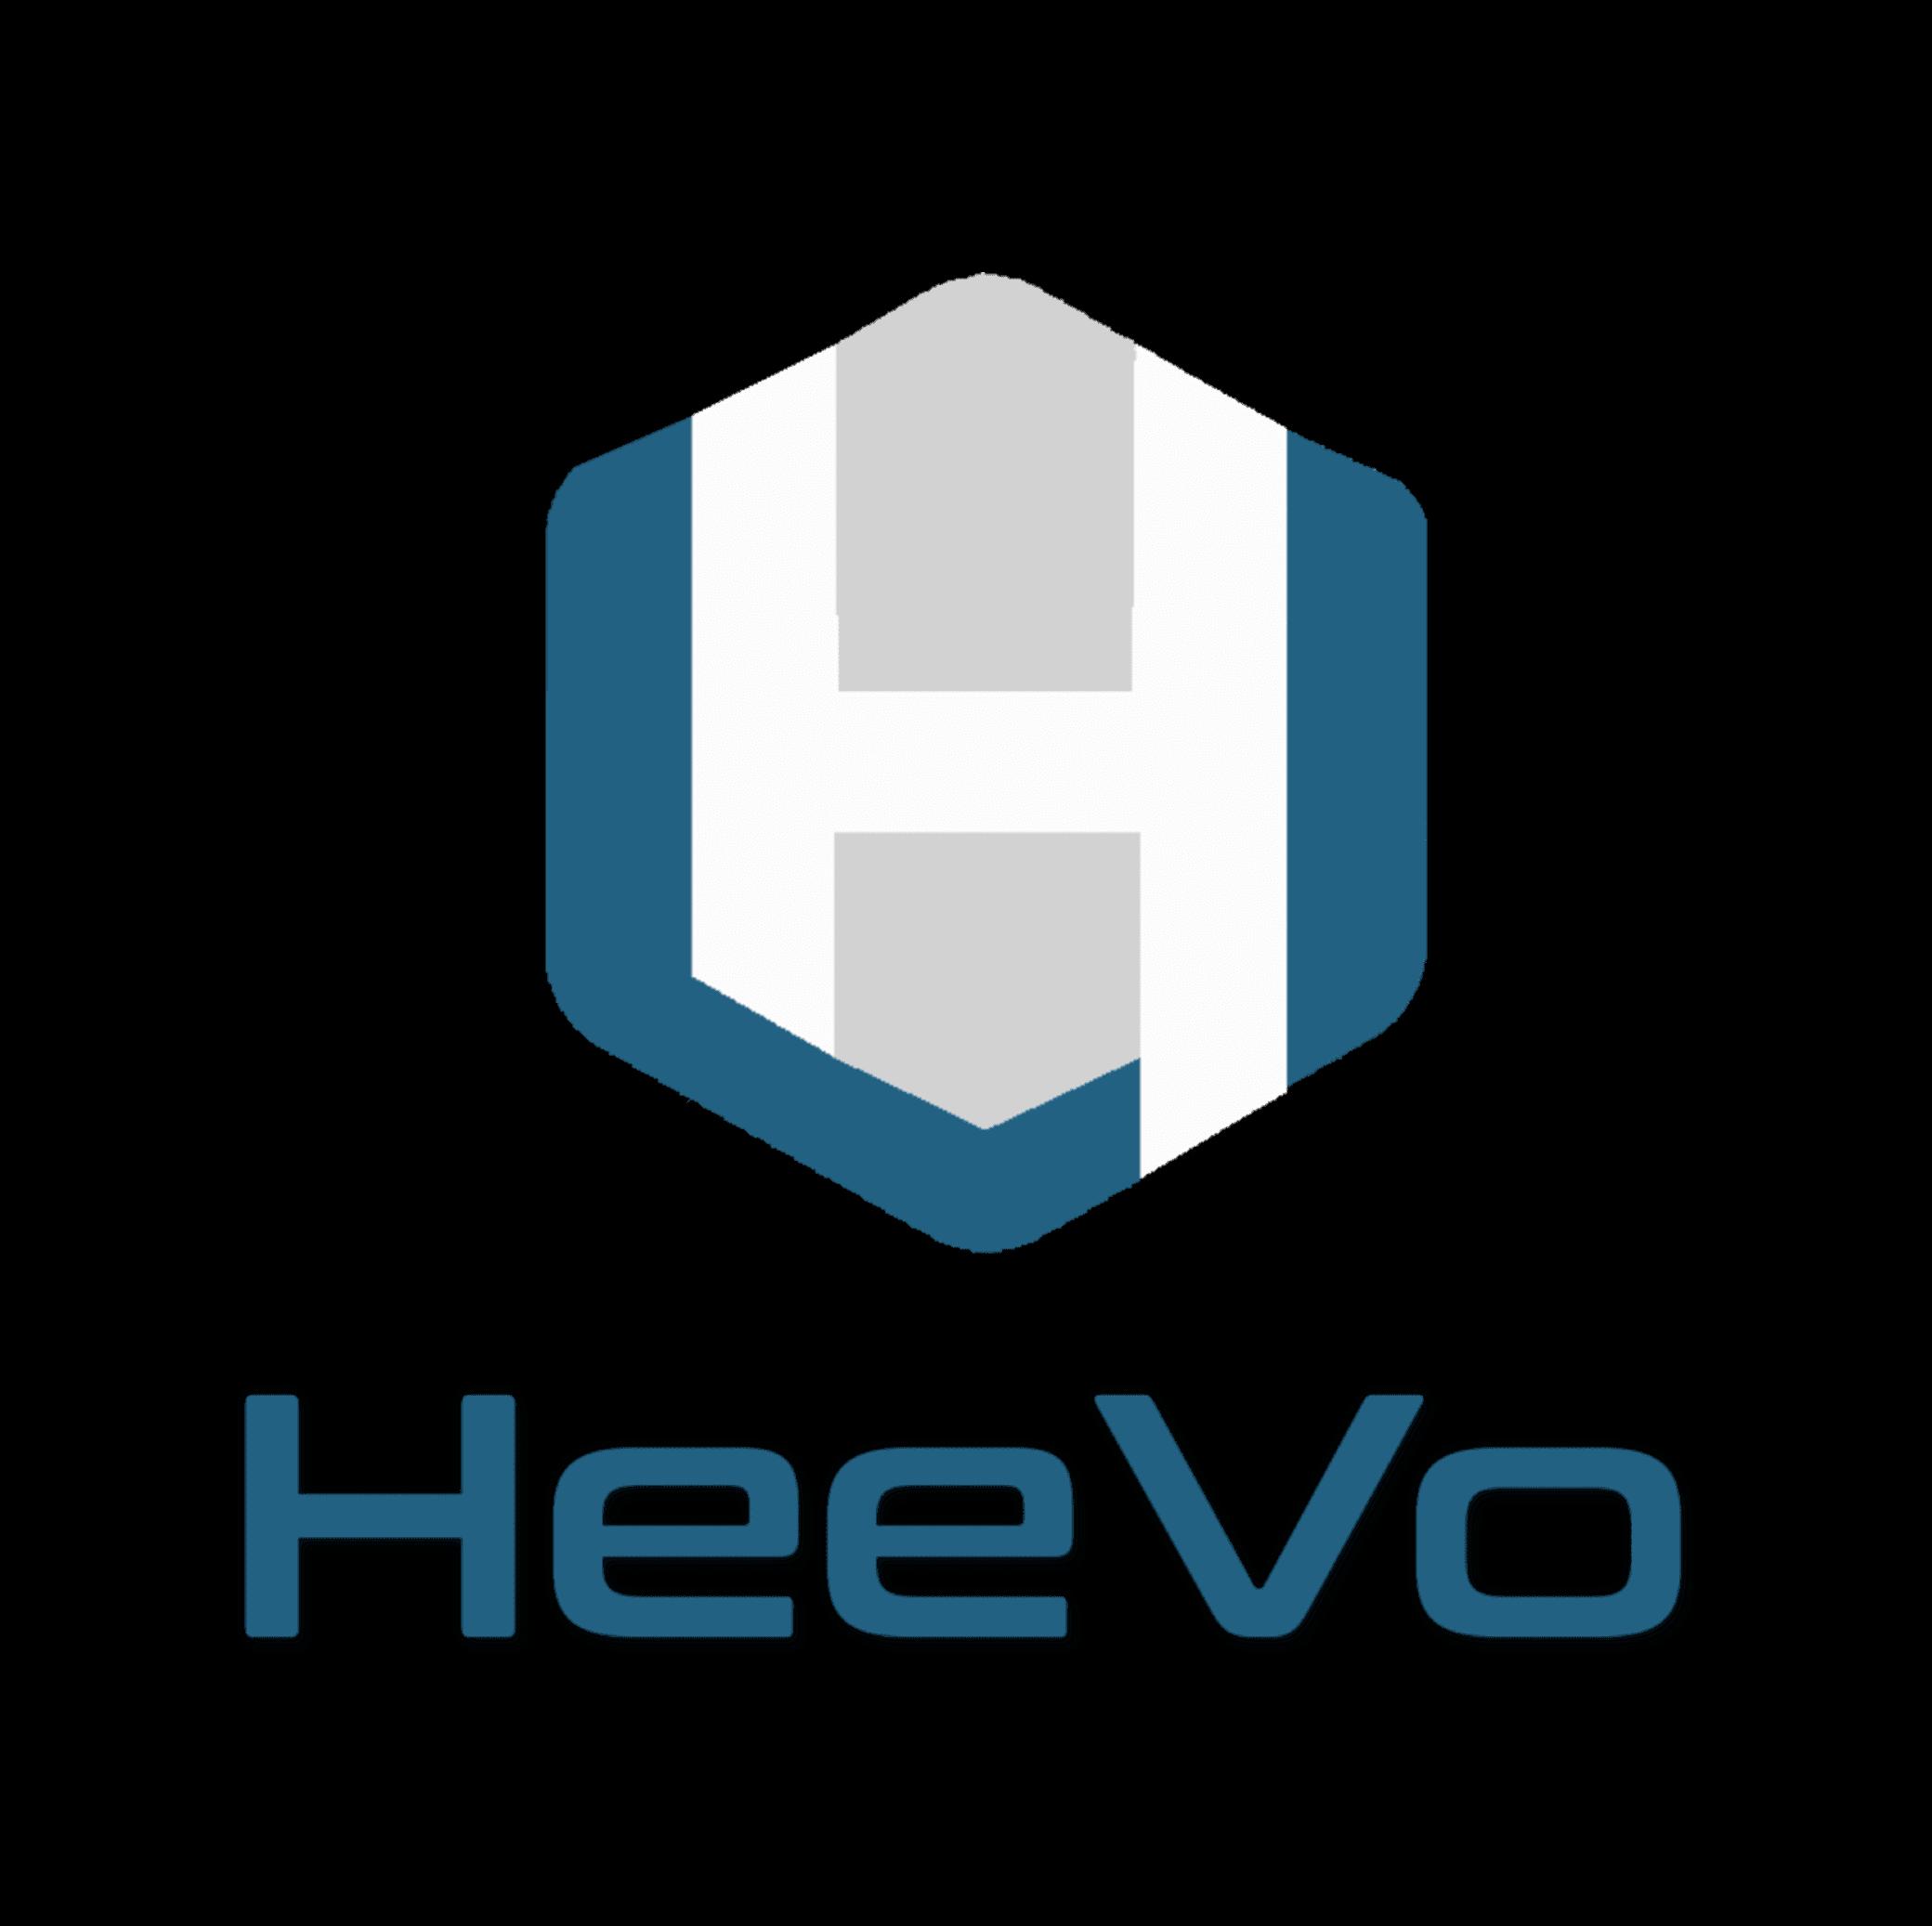 HeeVo_logo